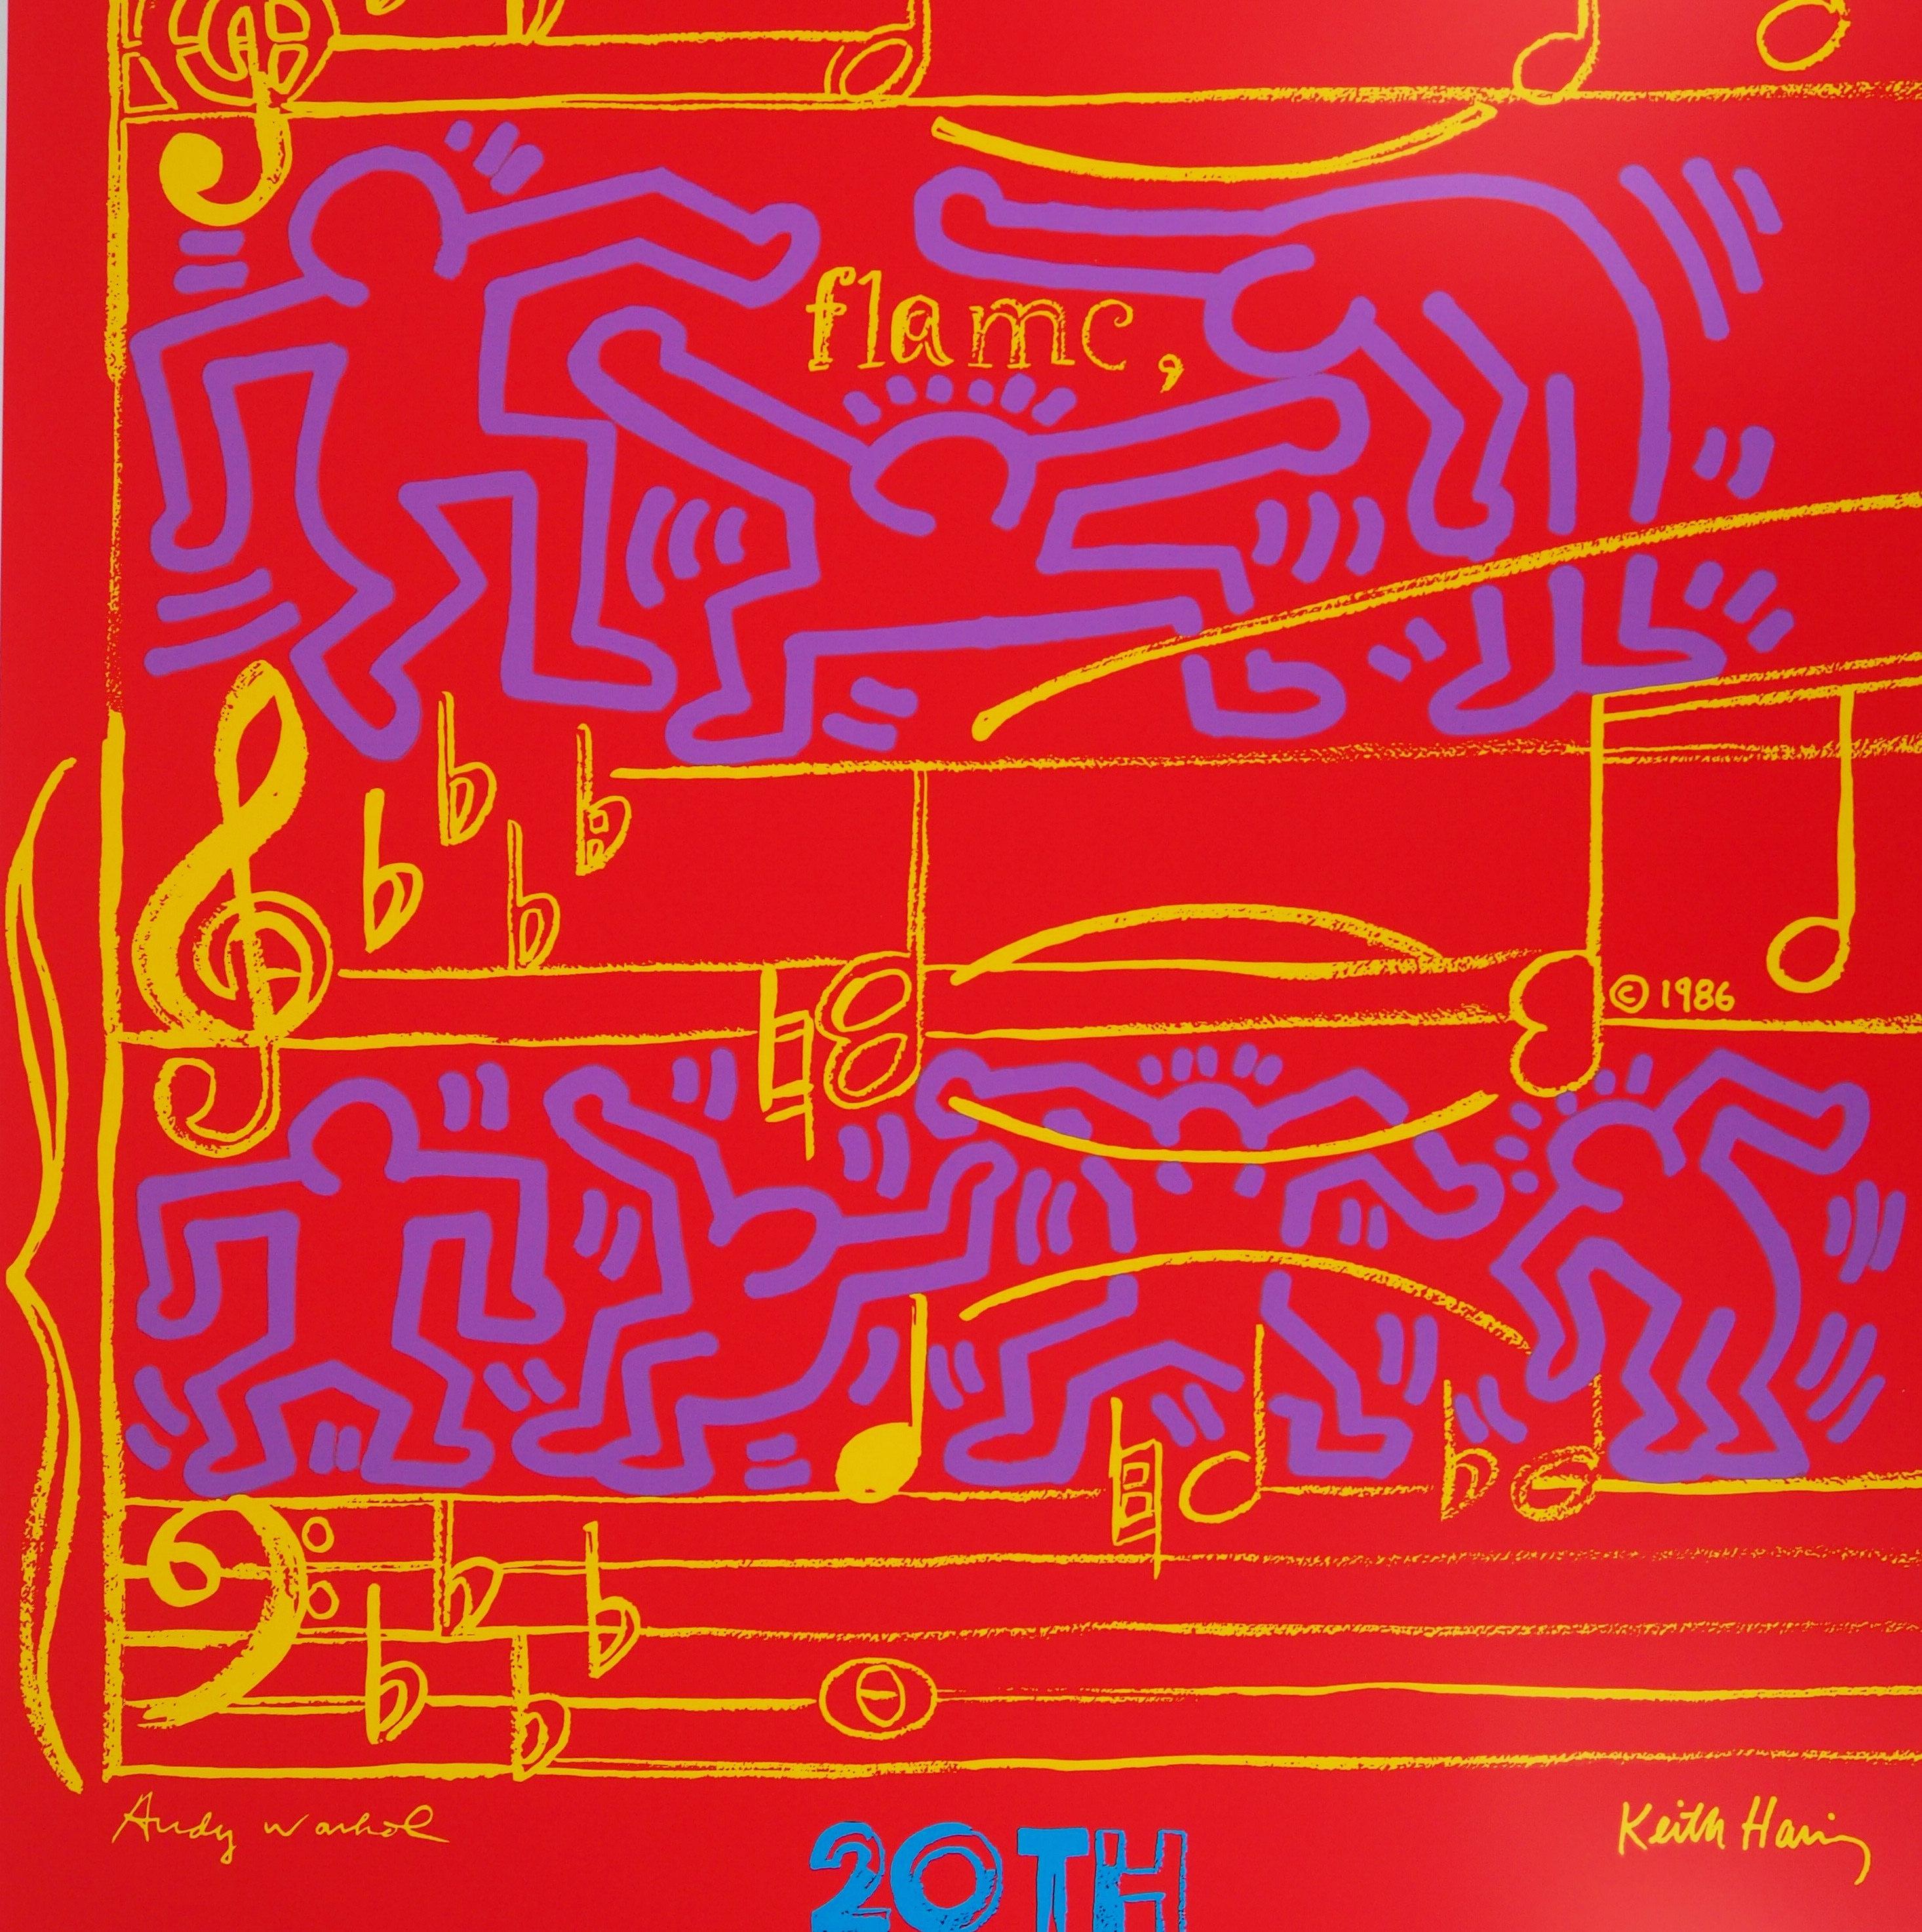 WARHOL & HARING - Jazz, Dancing on Music Sheet - Screenprint Poster, Montreux - American Modern Print by Andy Warhol